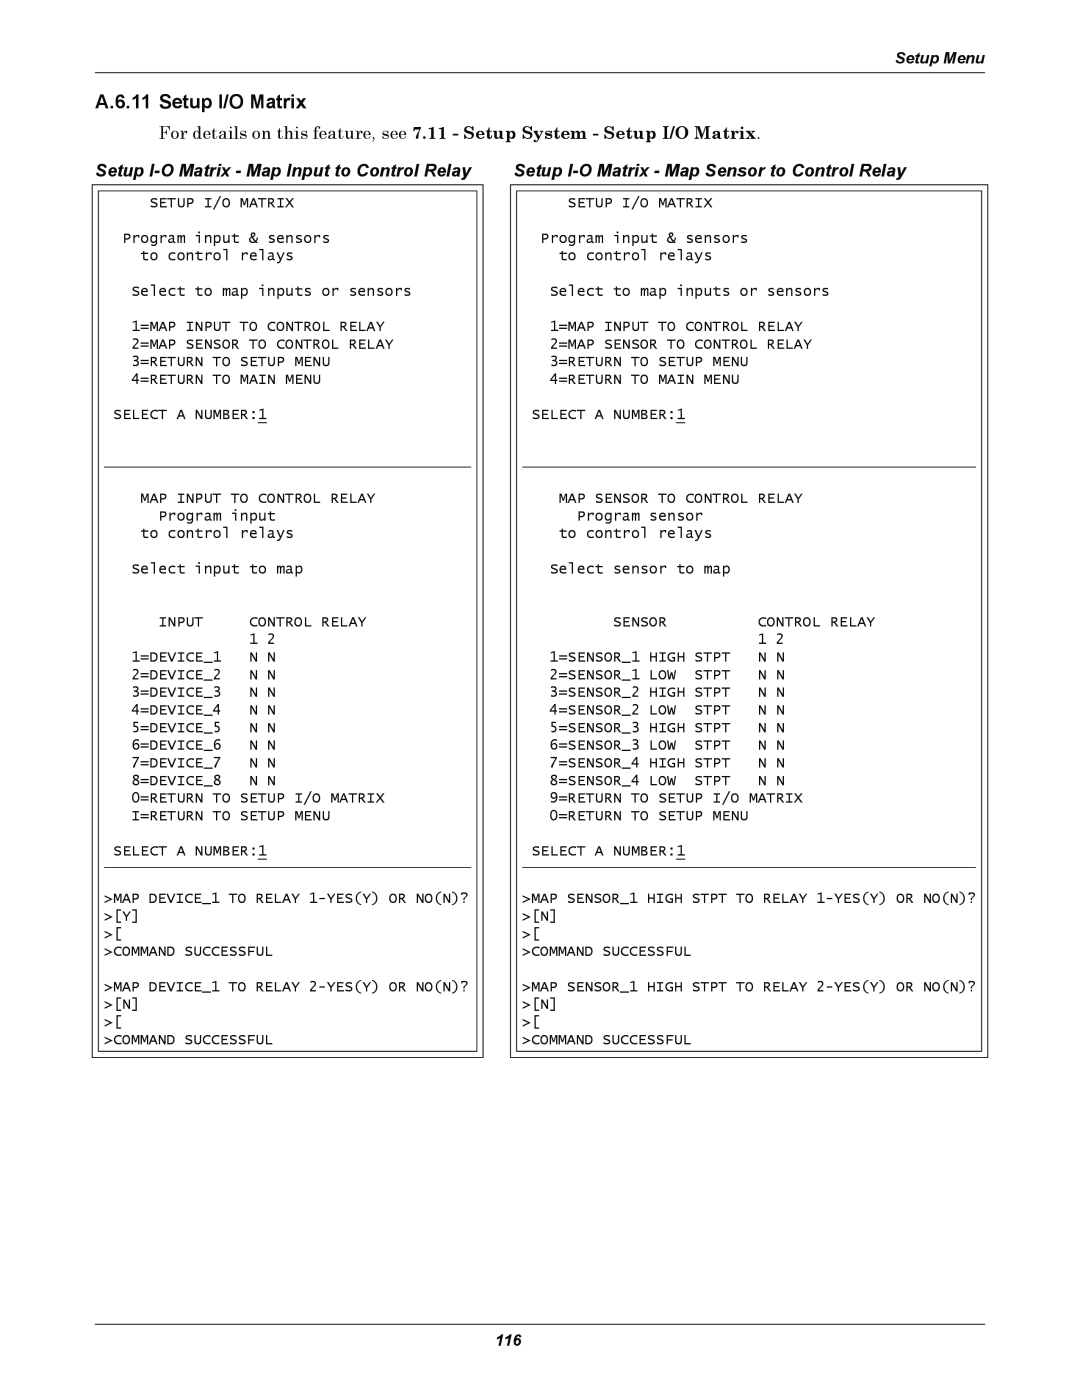 Emerson AC8 user manual A.6.11 Setup I/O Matrix, Setup I-OMatrix - Map Input to Control Relay, Setup Menu 